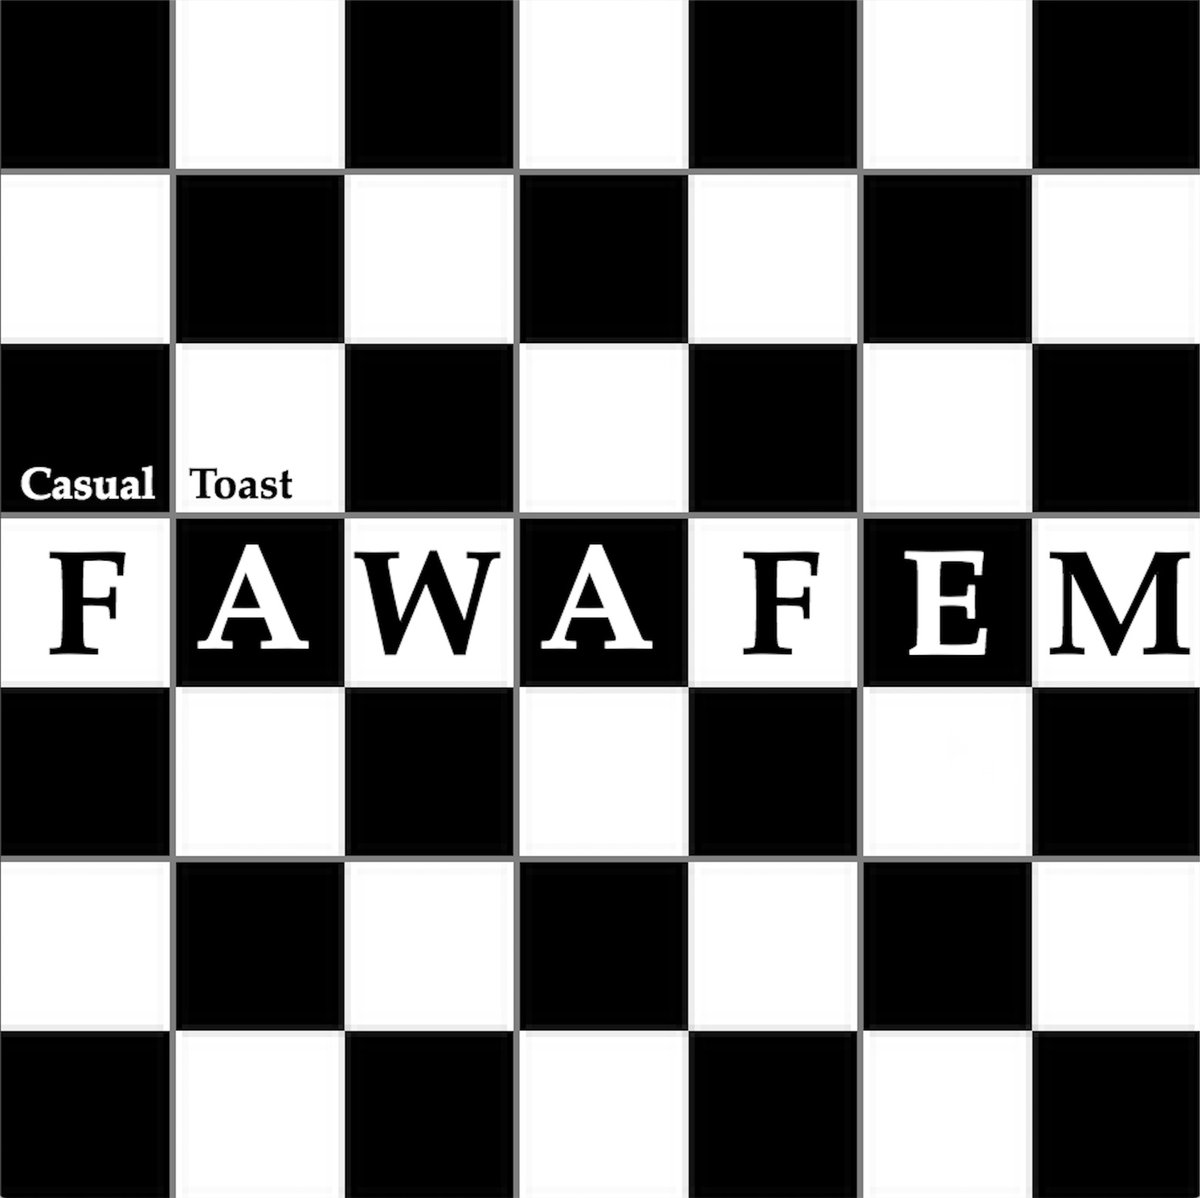 Casual Toast 2019 - FAWAFEM